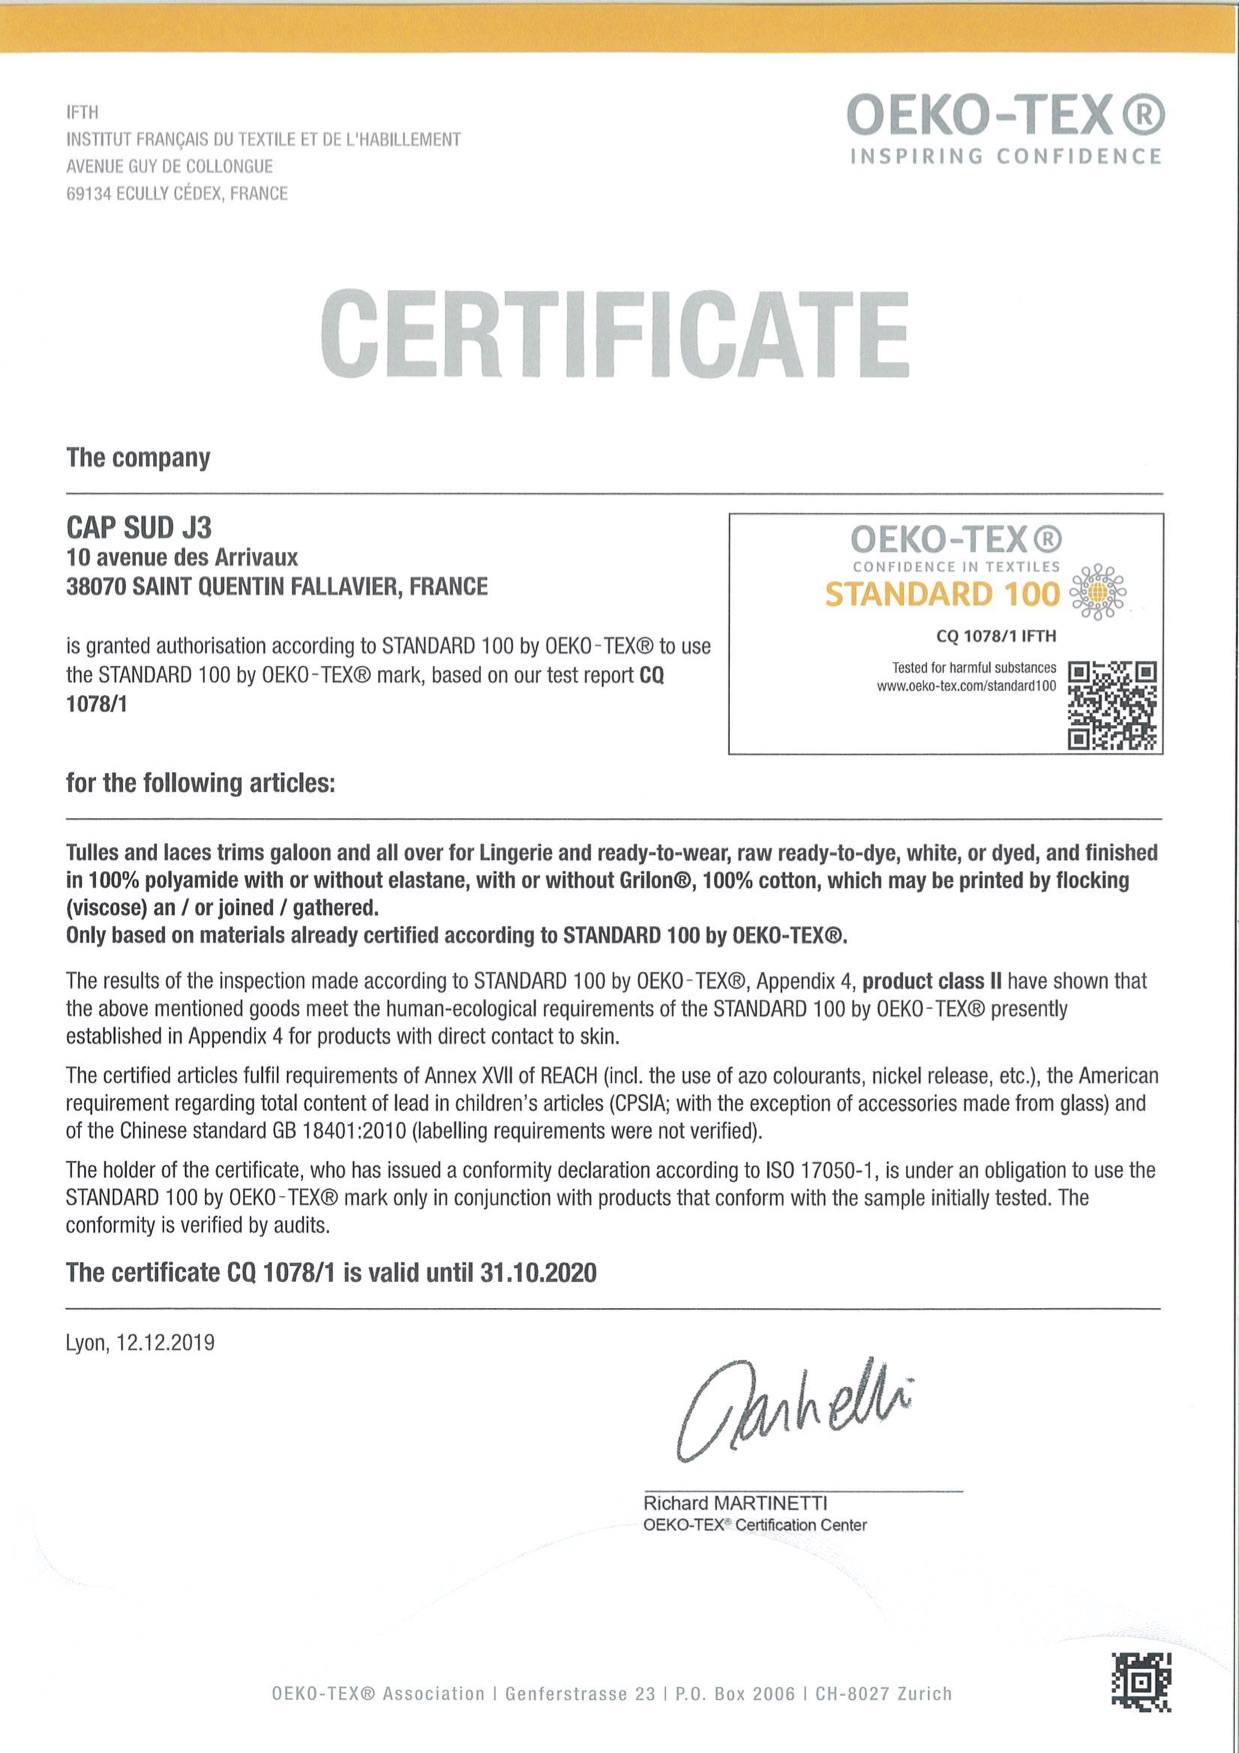 oeko-tex certificate